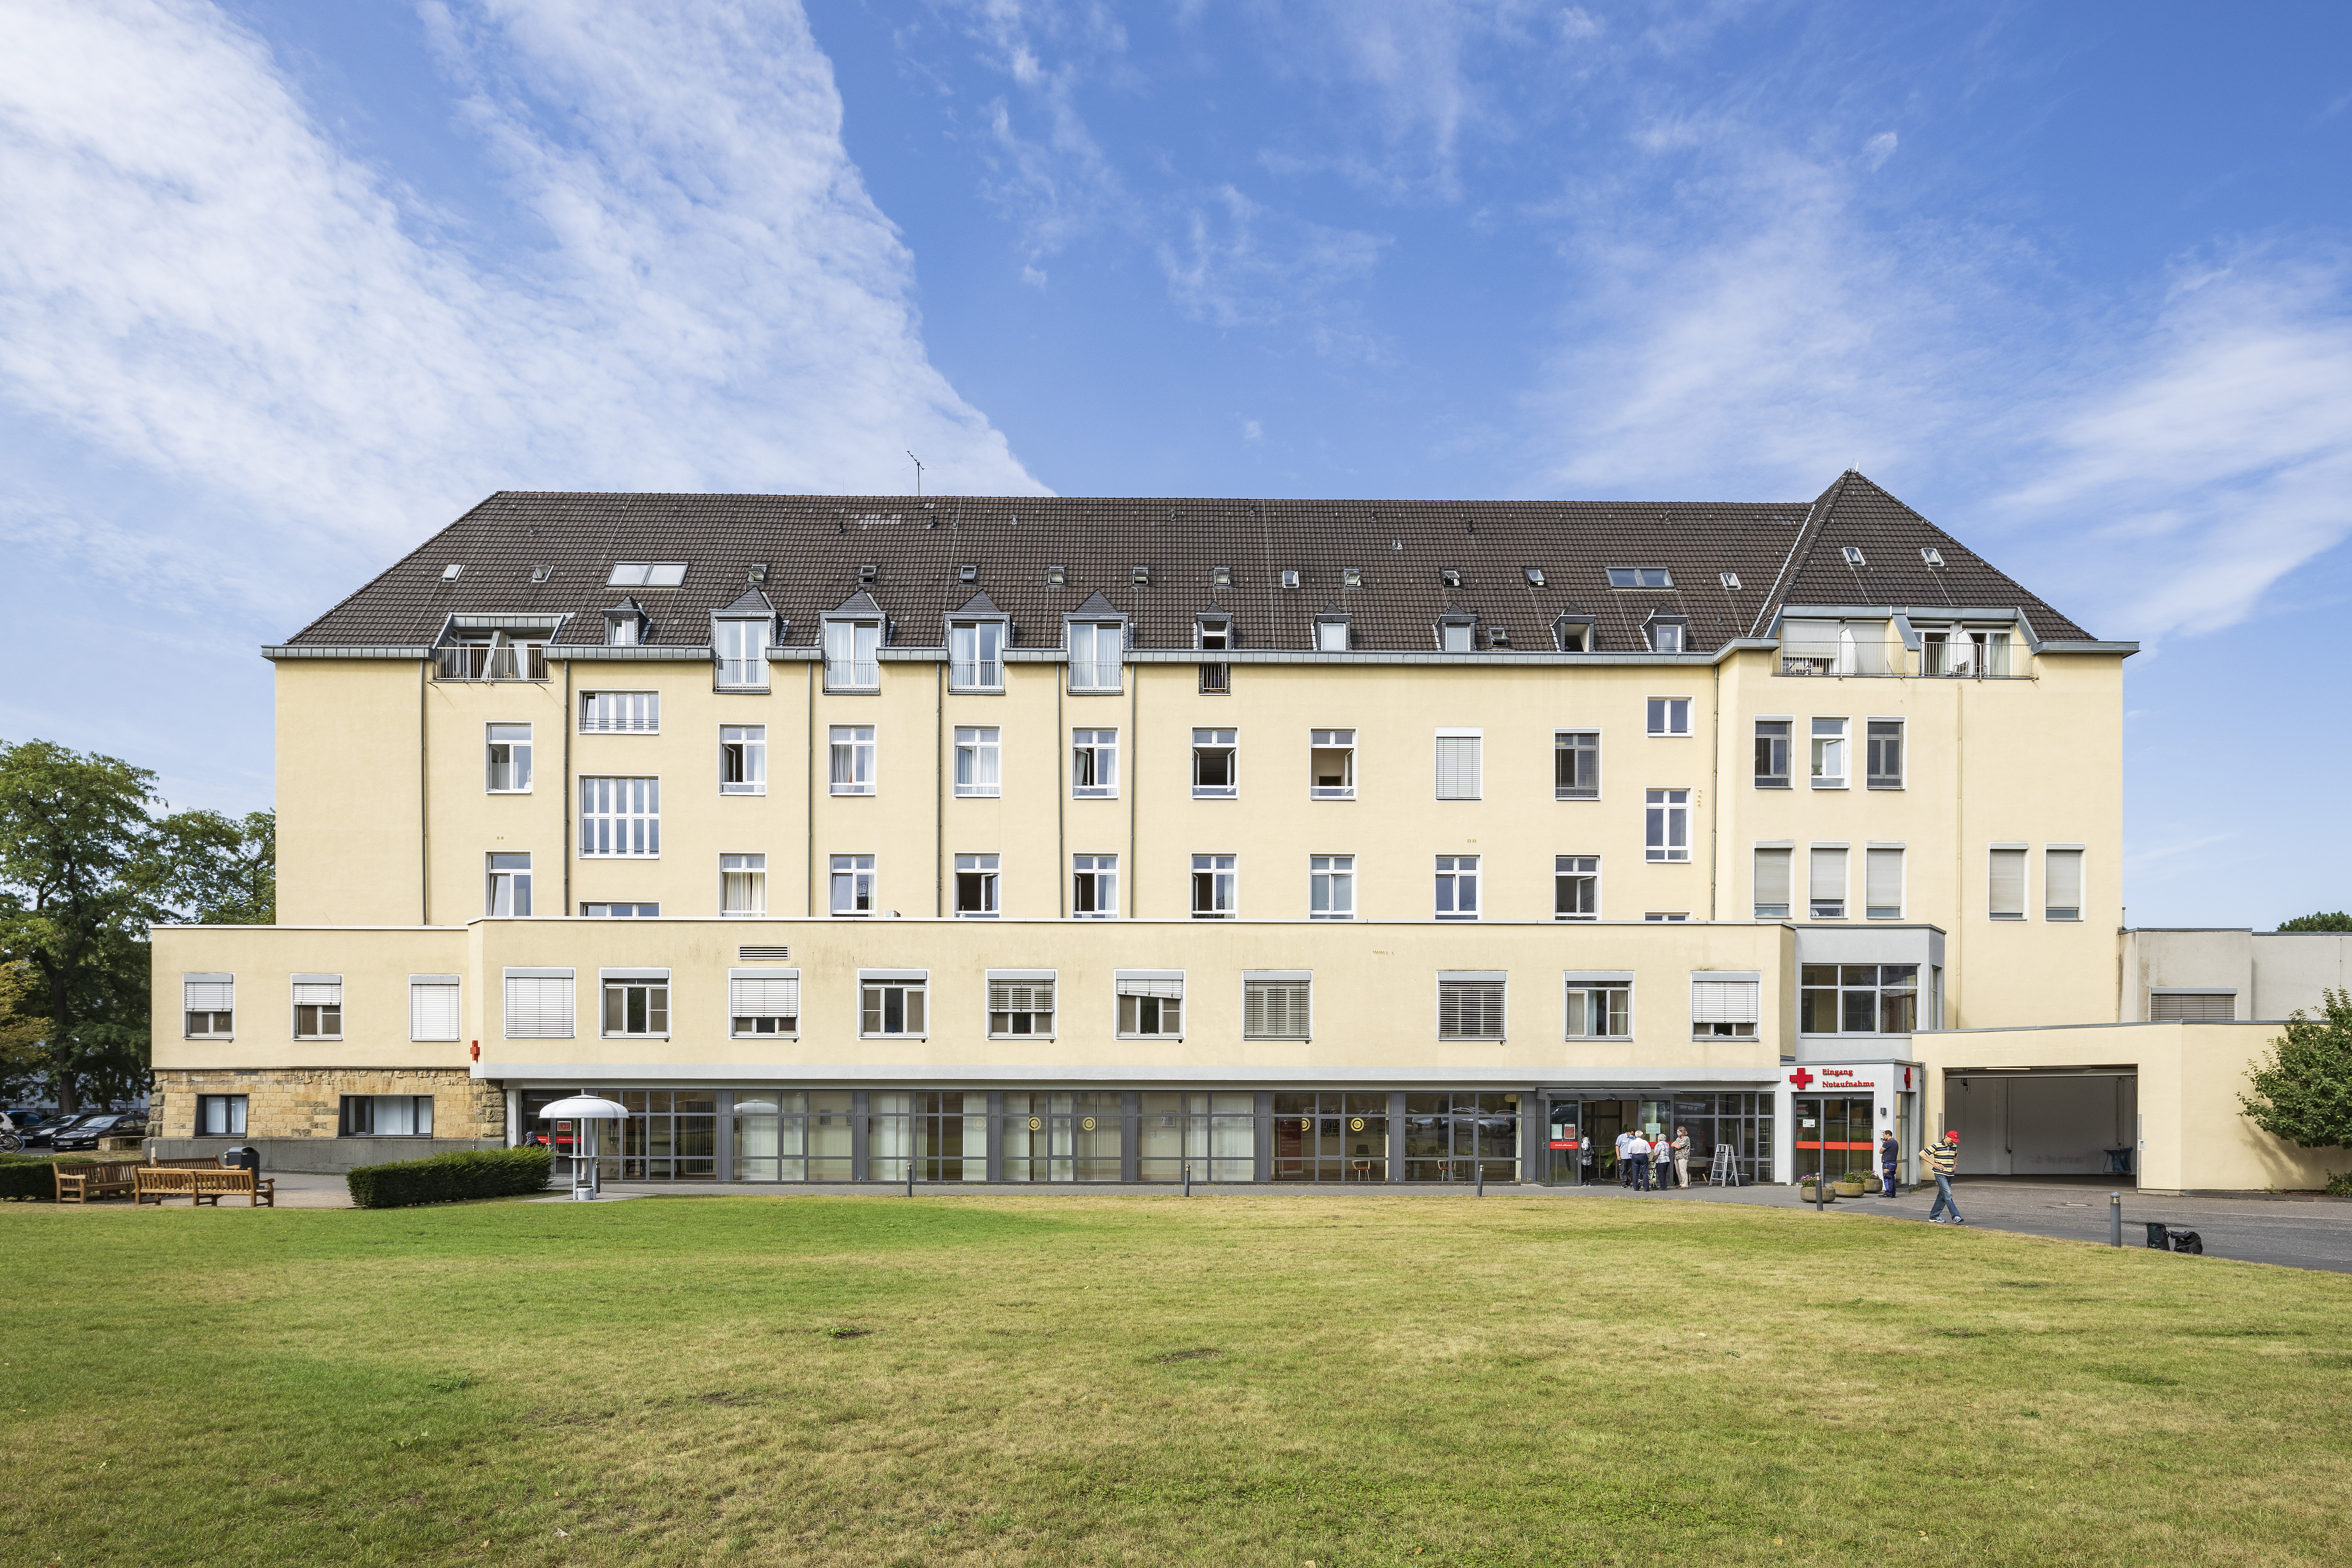 St. Hildegardis Krankenhaus in Köln-Lindenthal